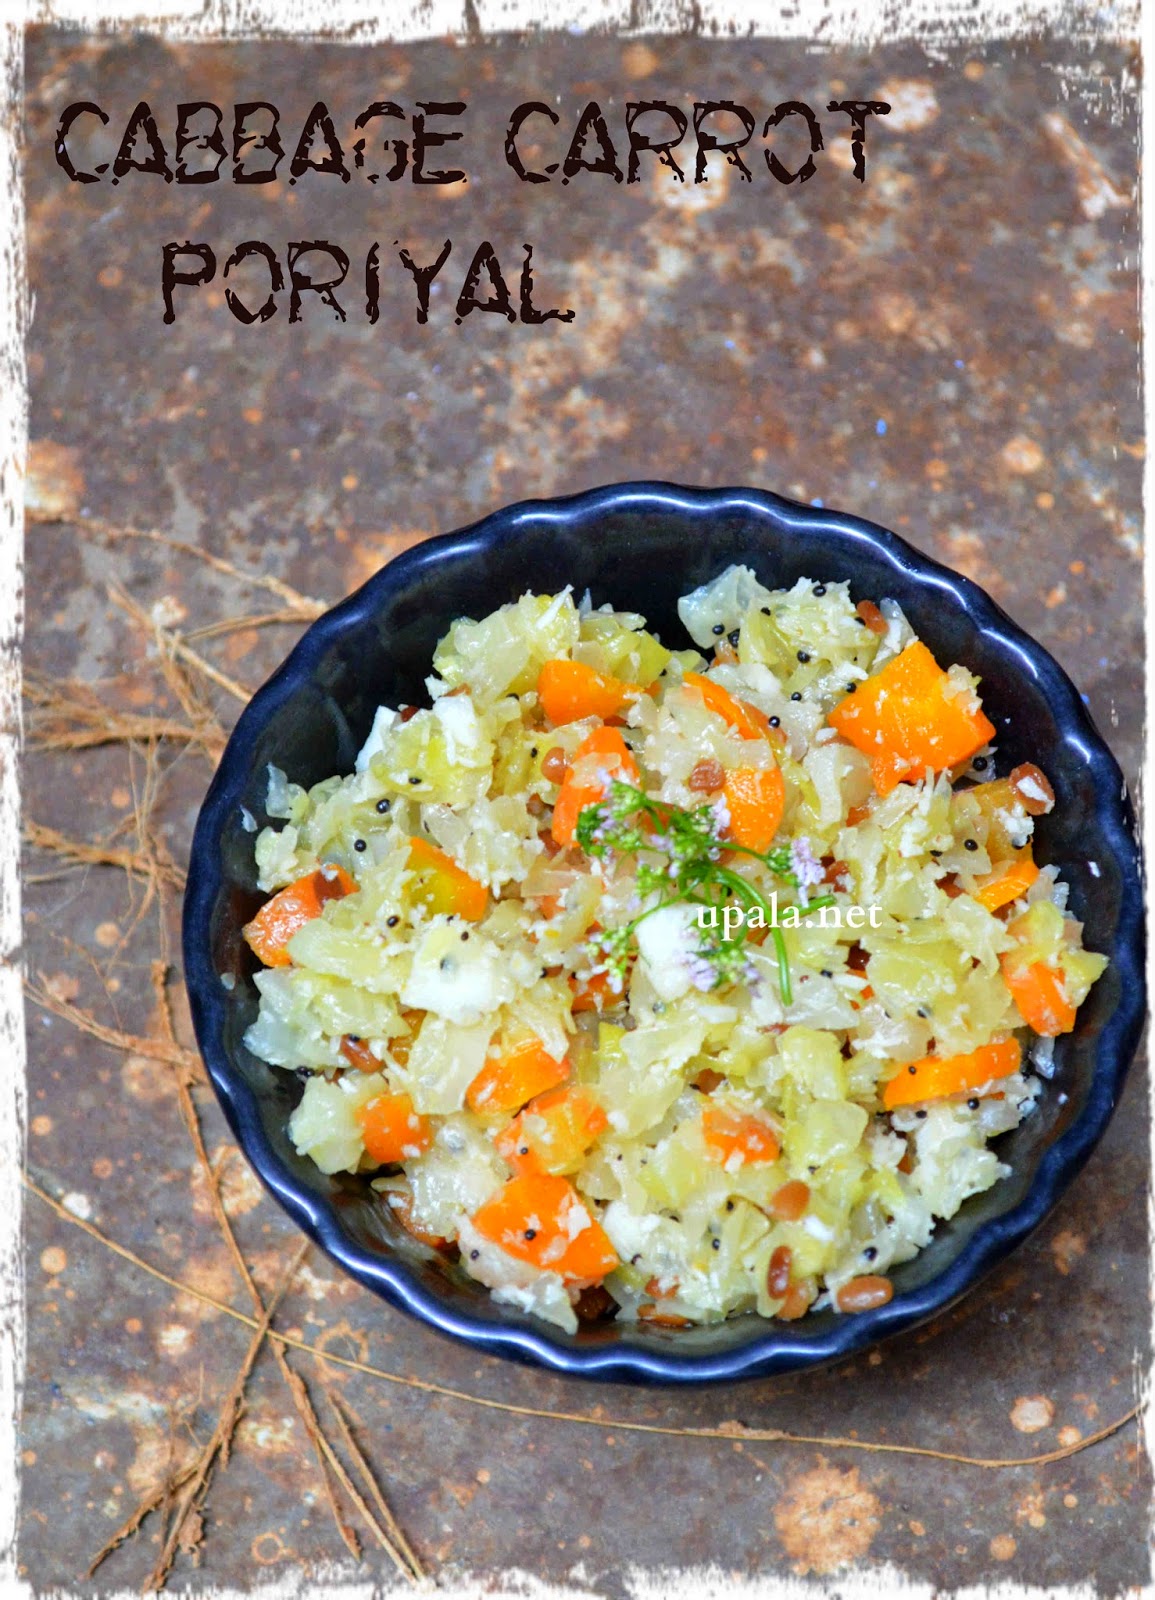 Upala: Cabbage Carrot poriyal